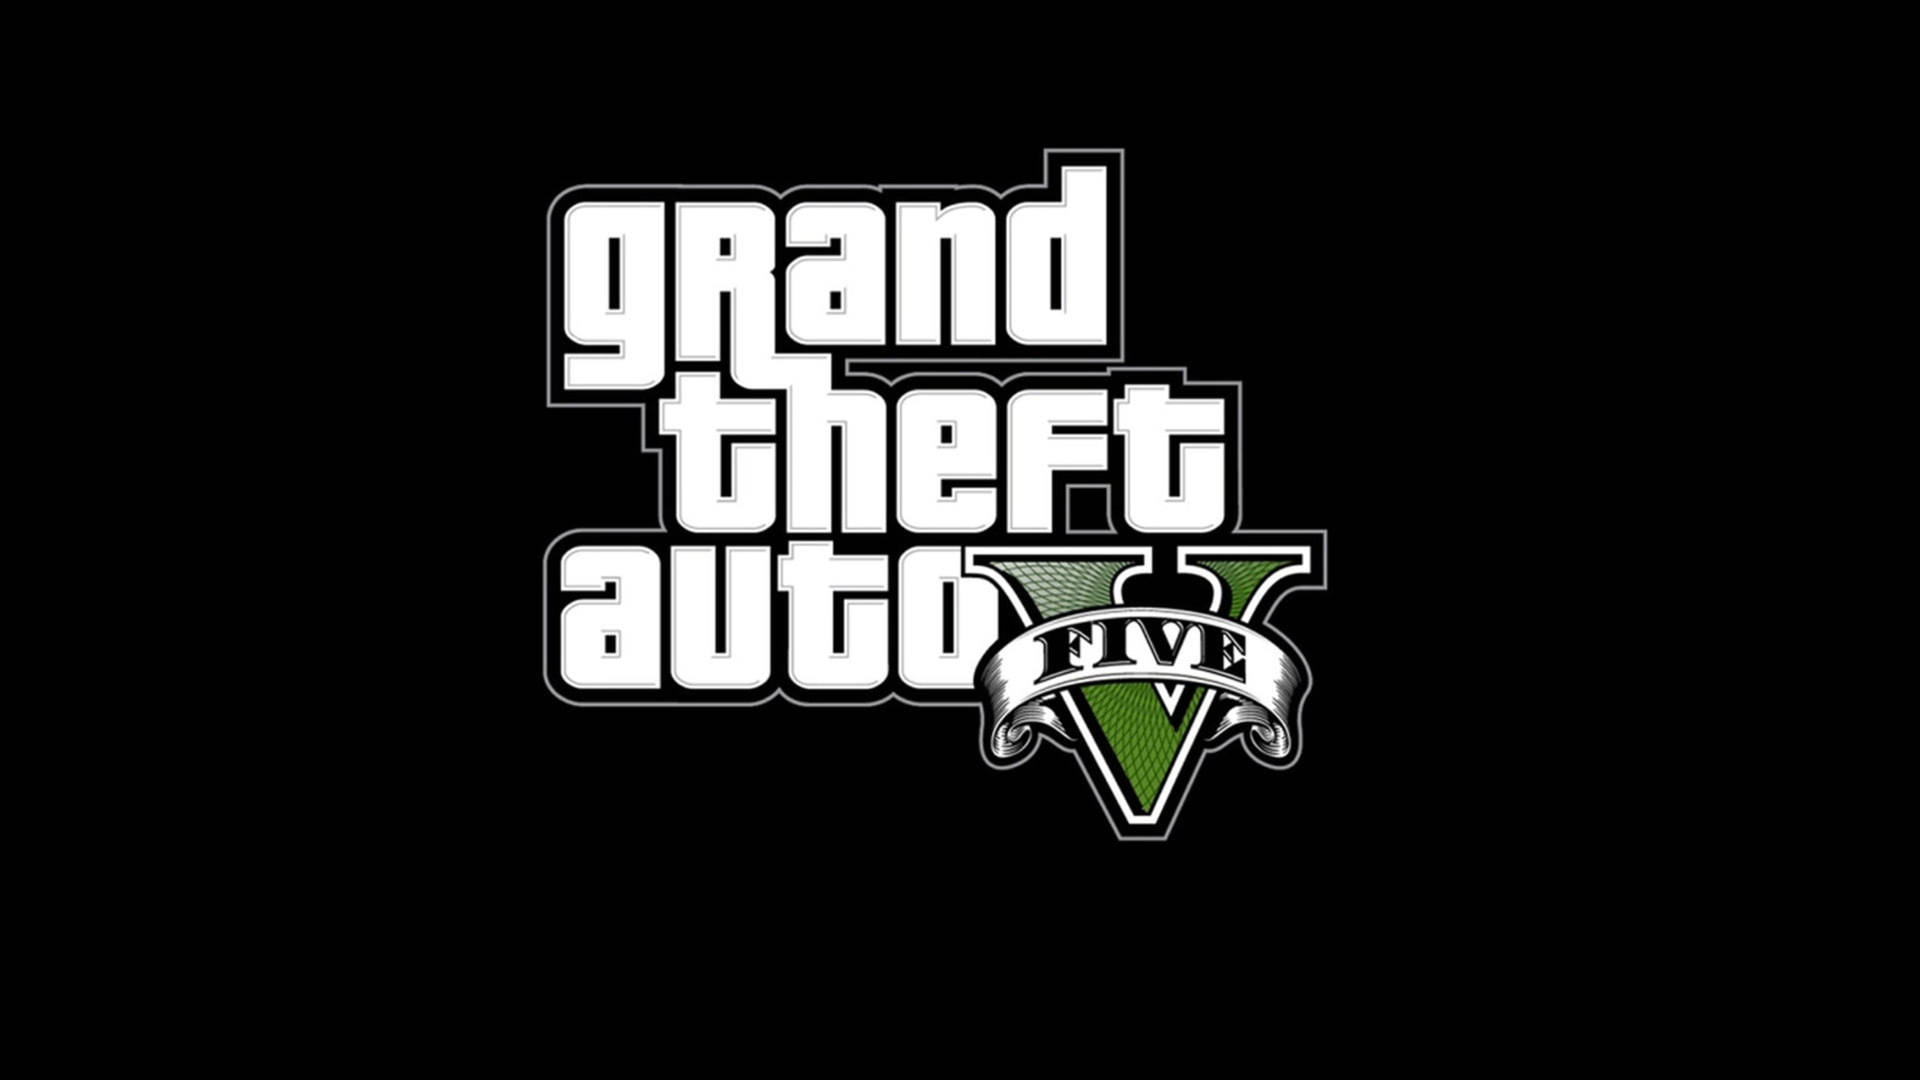 Grand Theft Auto V Logo Background